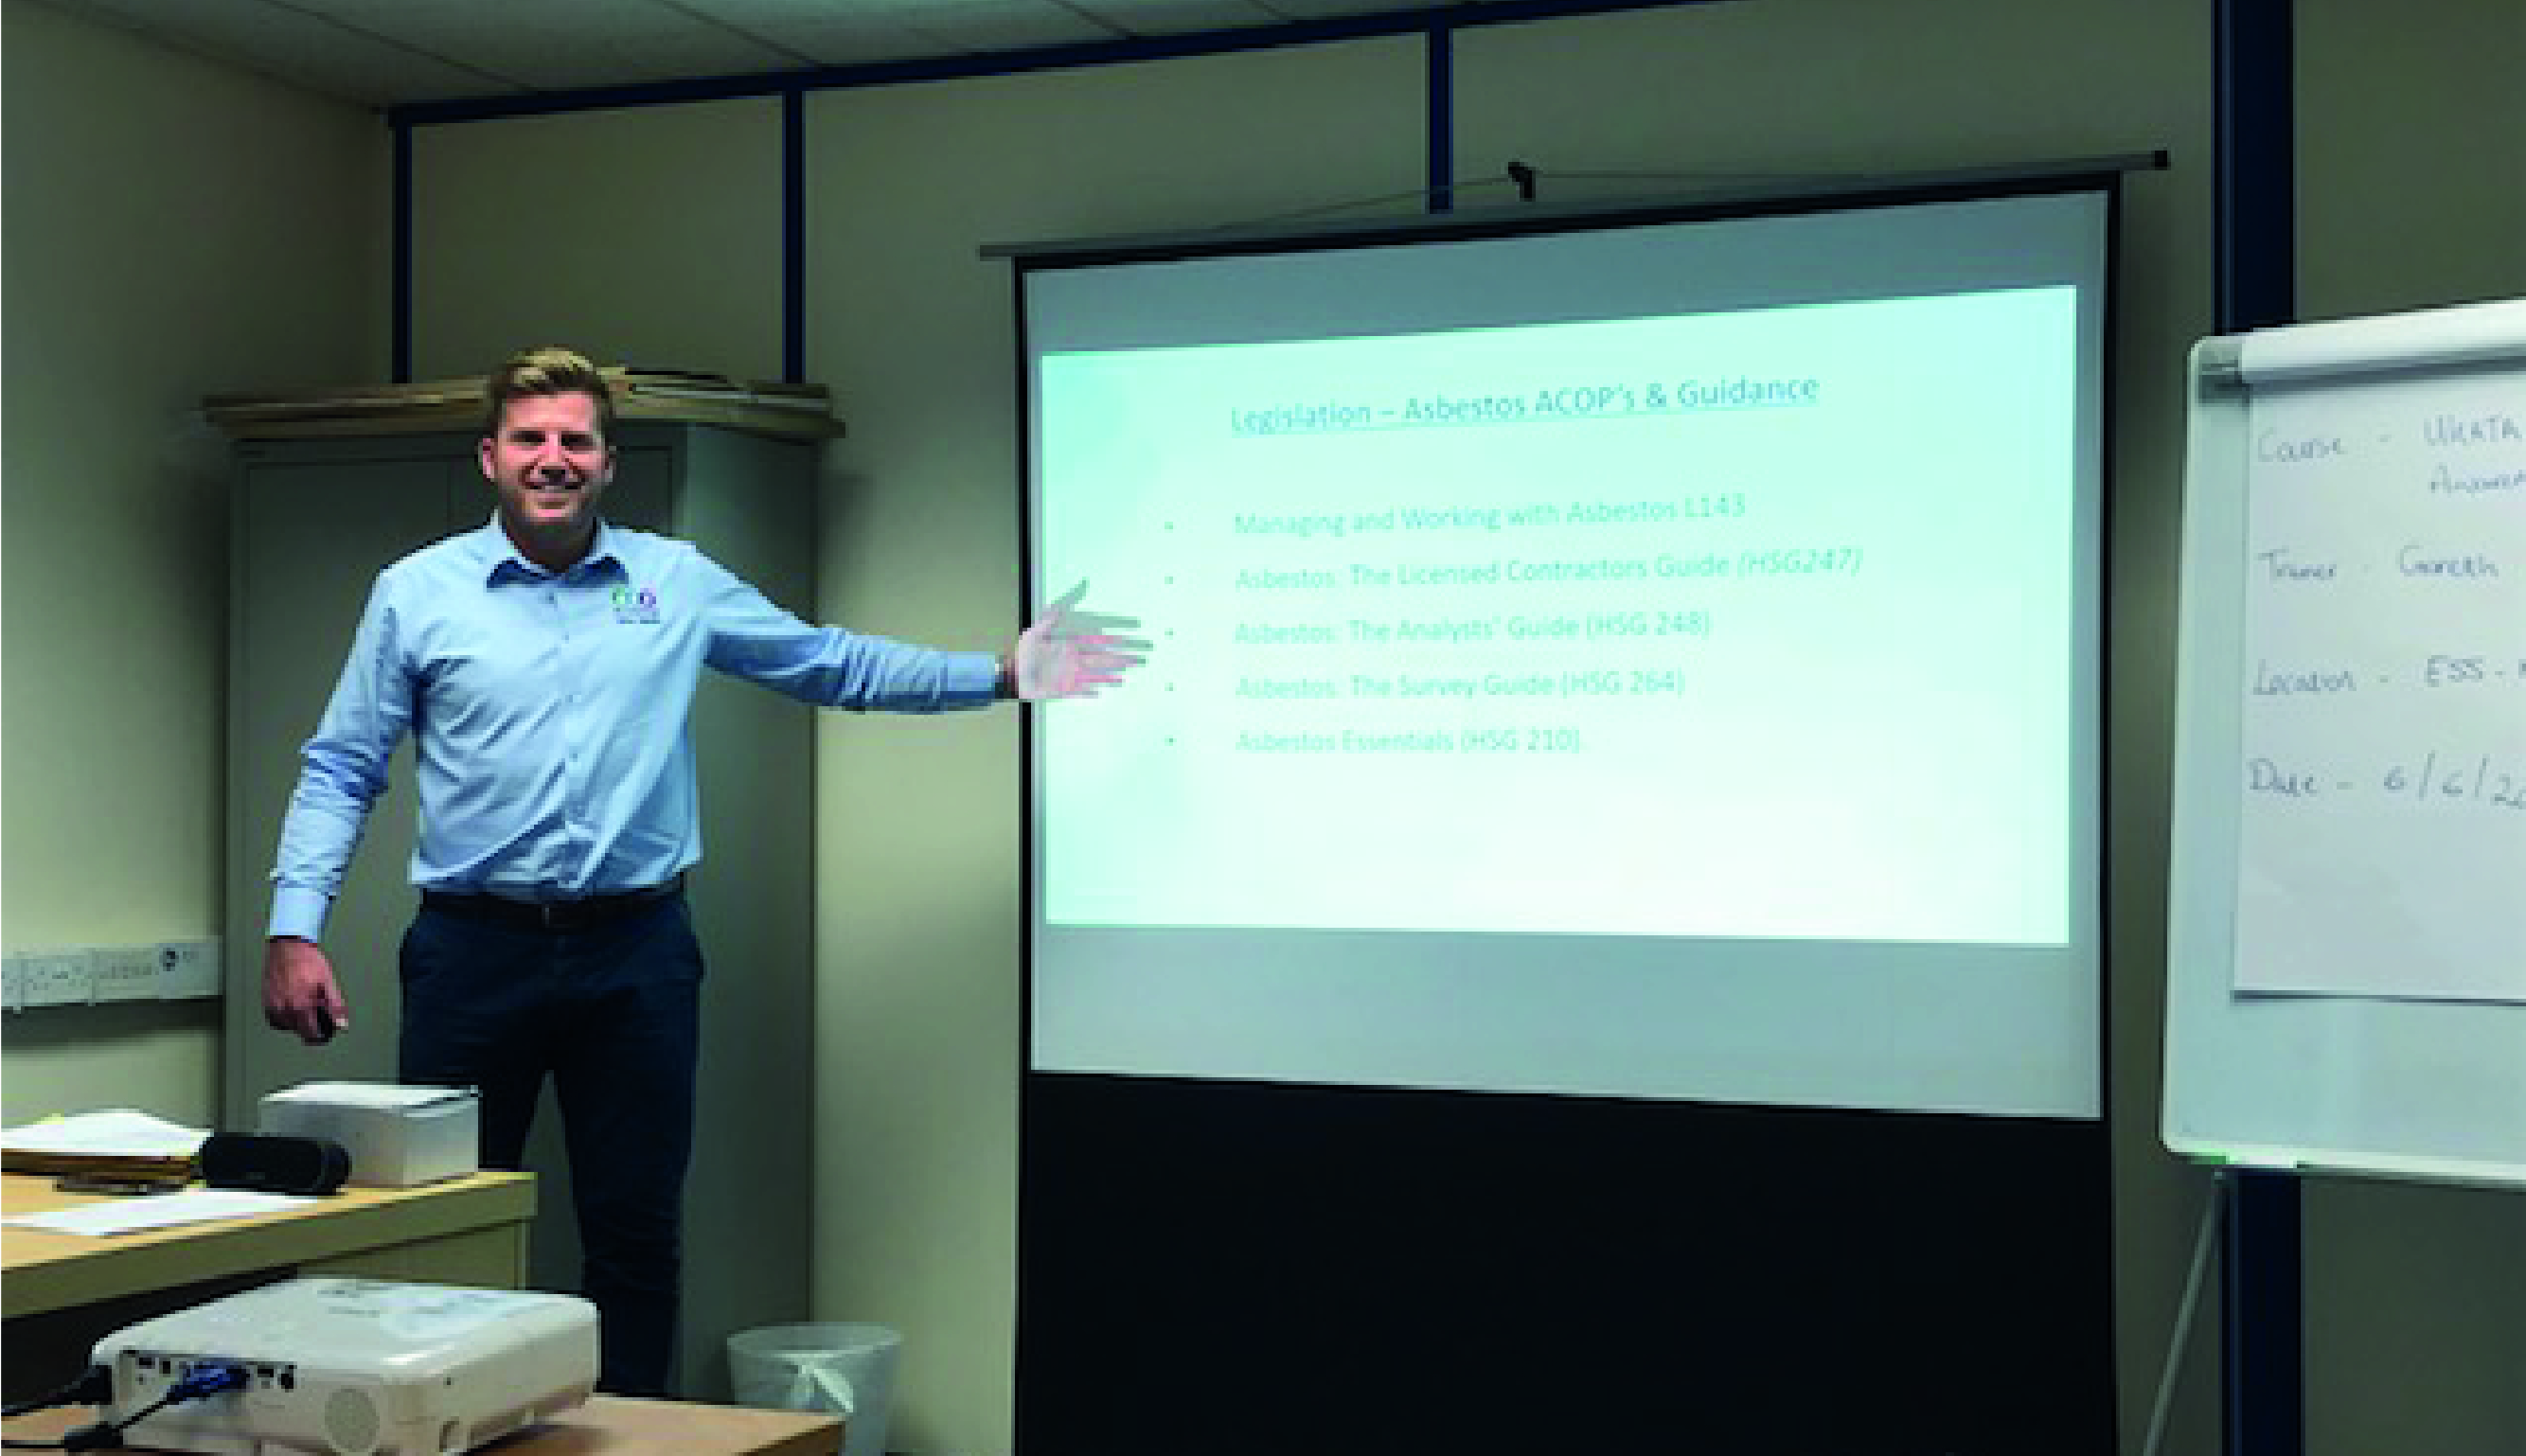 Image shows trainer giving asbestos presentation.